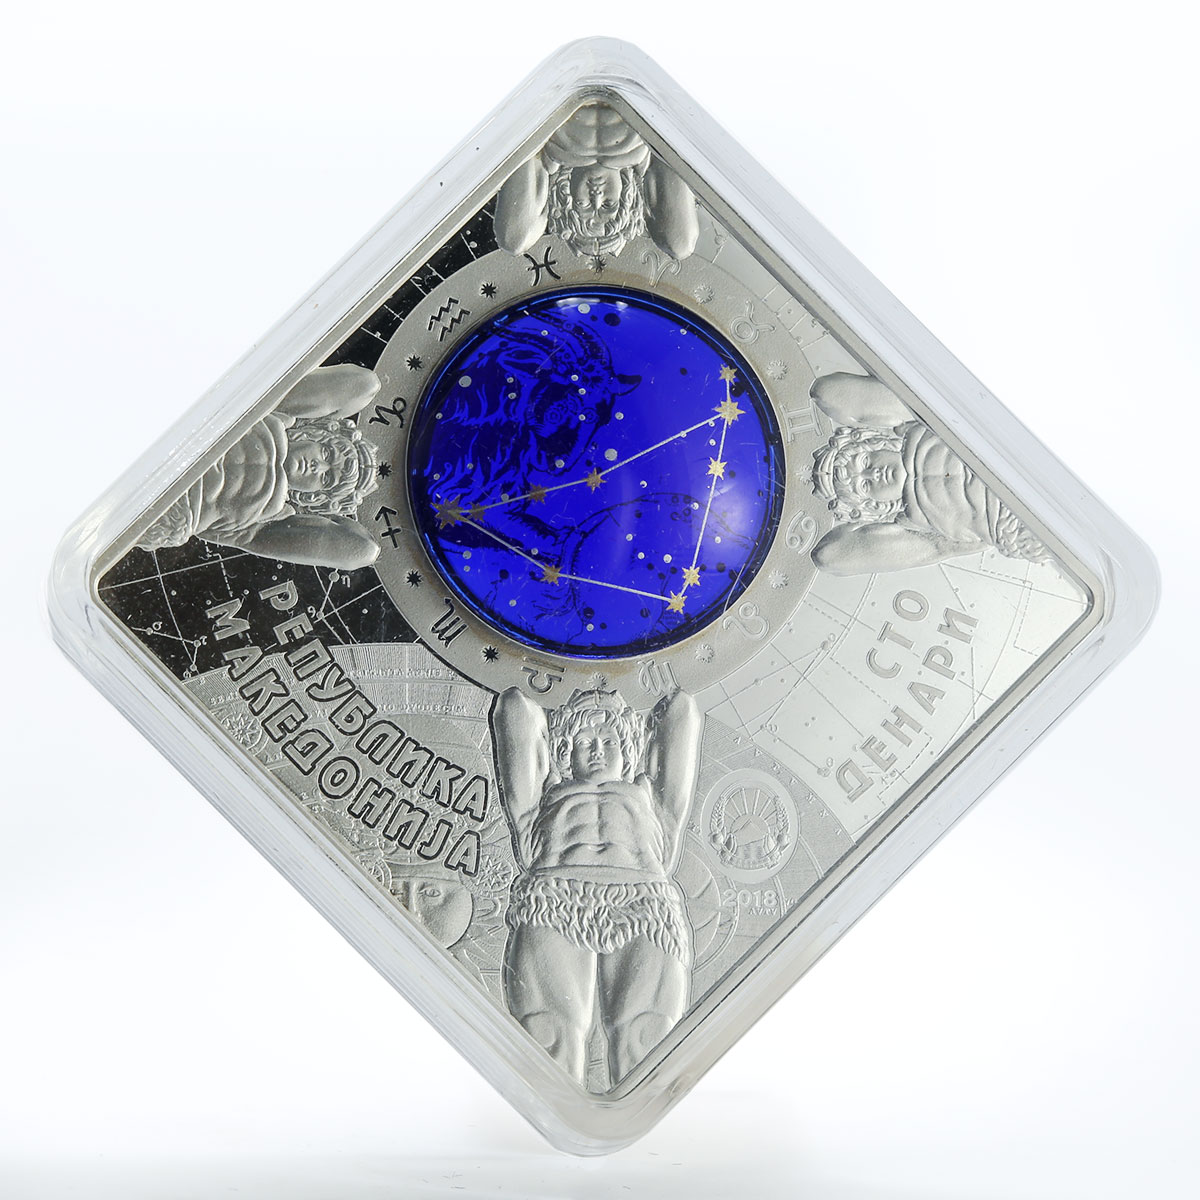 Macedonia 100 denars Zodiac Capricorn 3D printing silver coin 2018